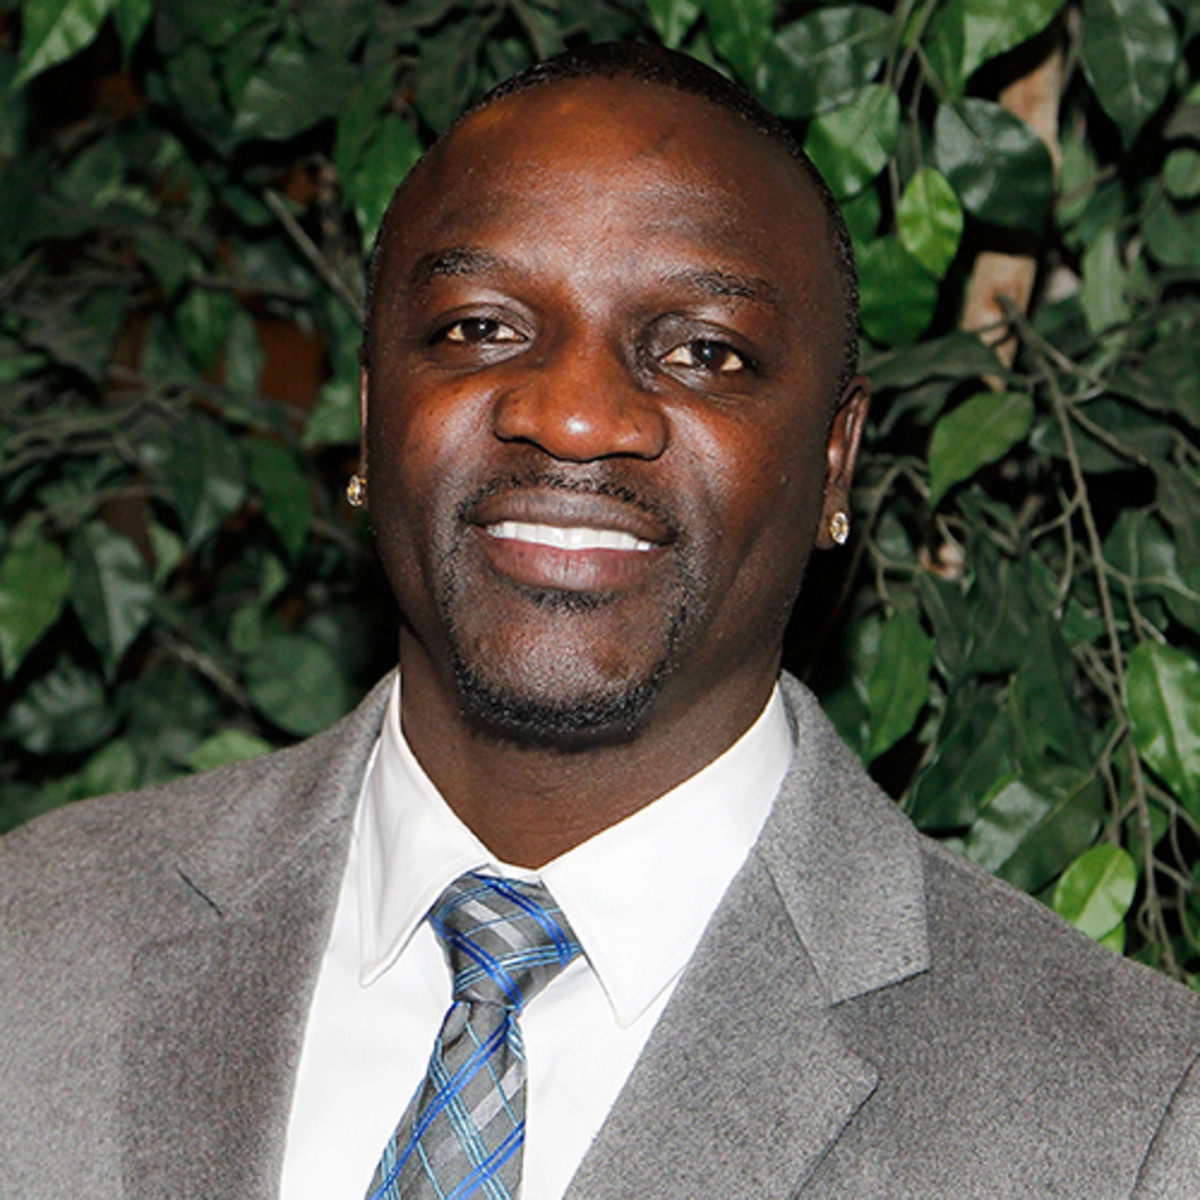 Money Brings More Problem Than Comfort - Akon  